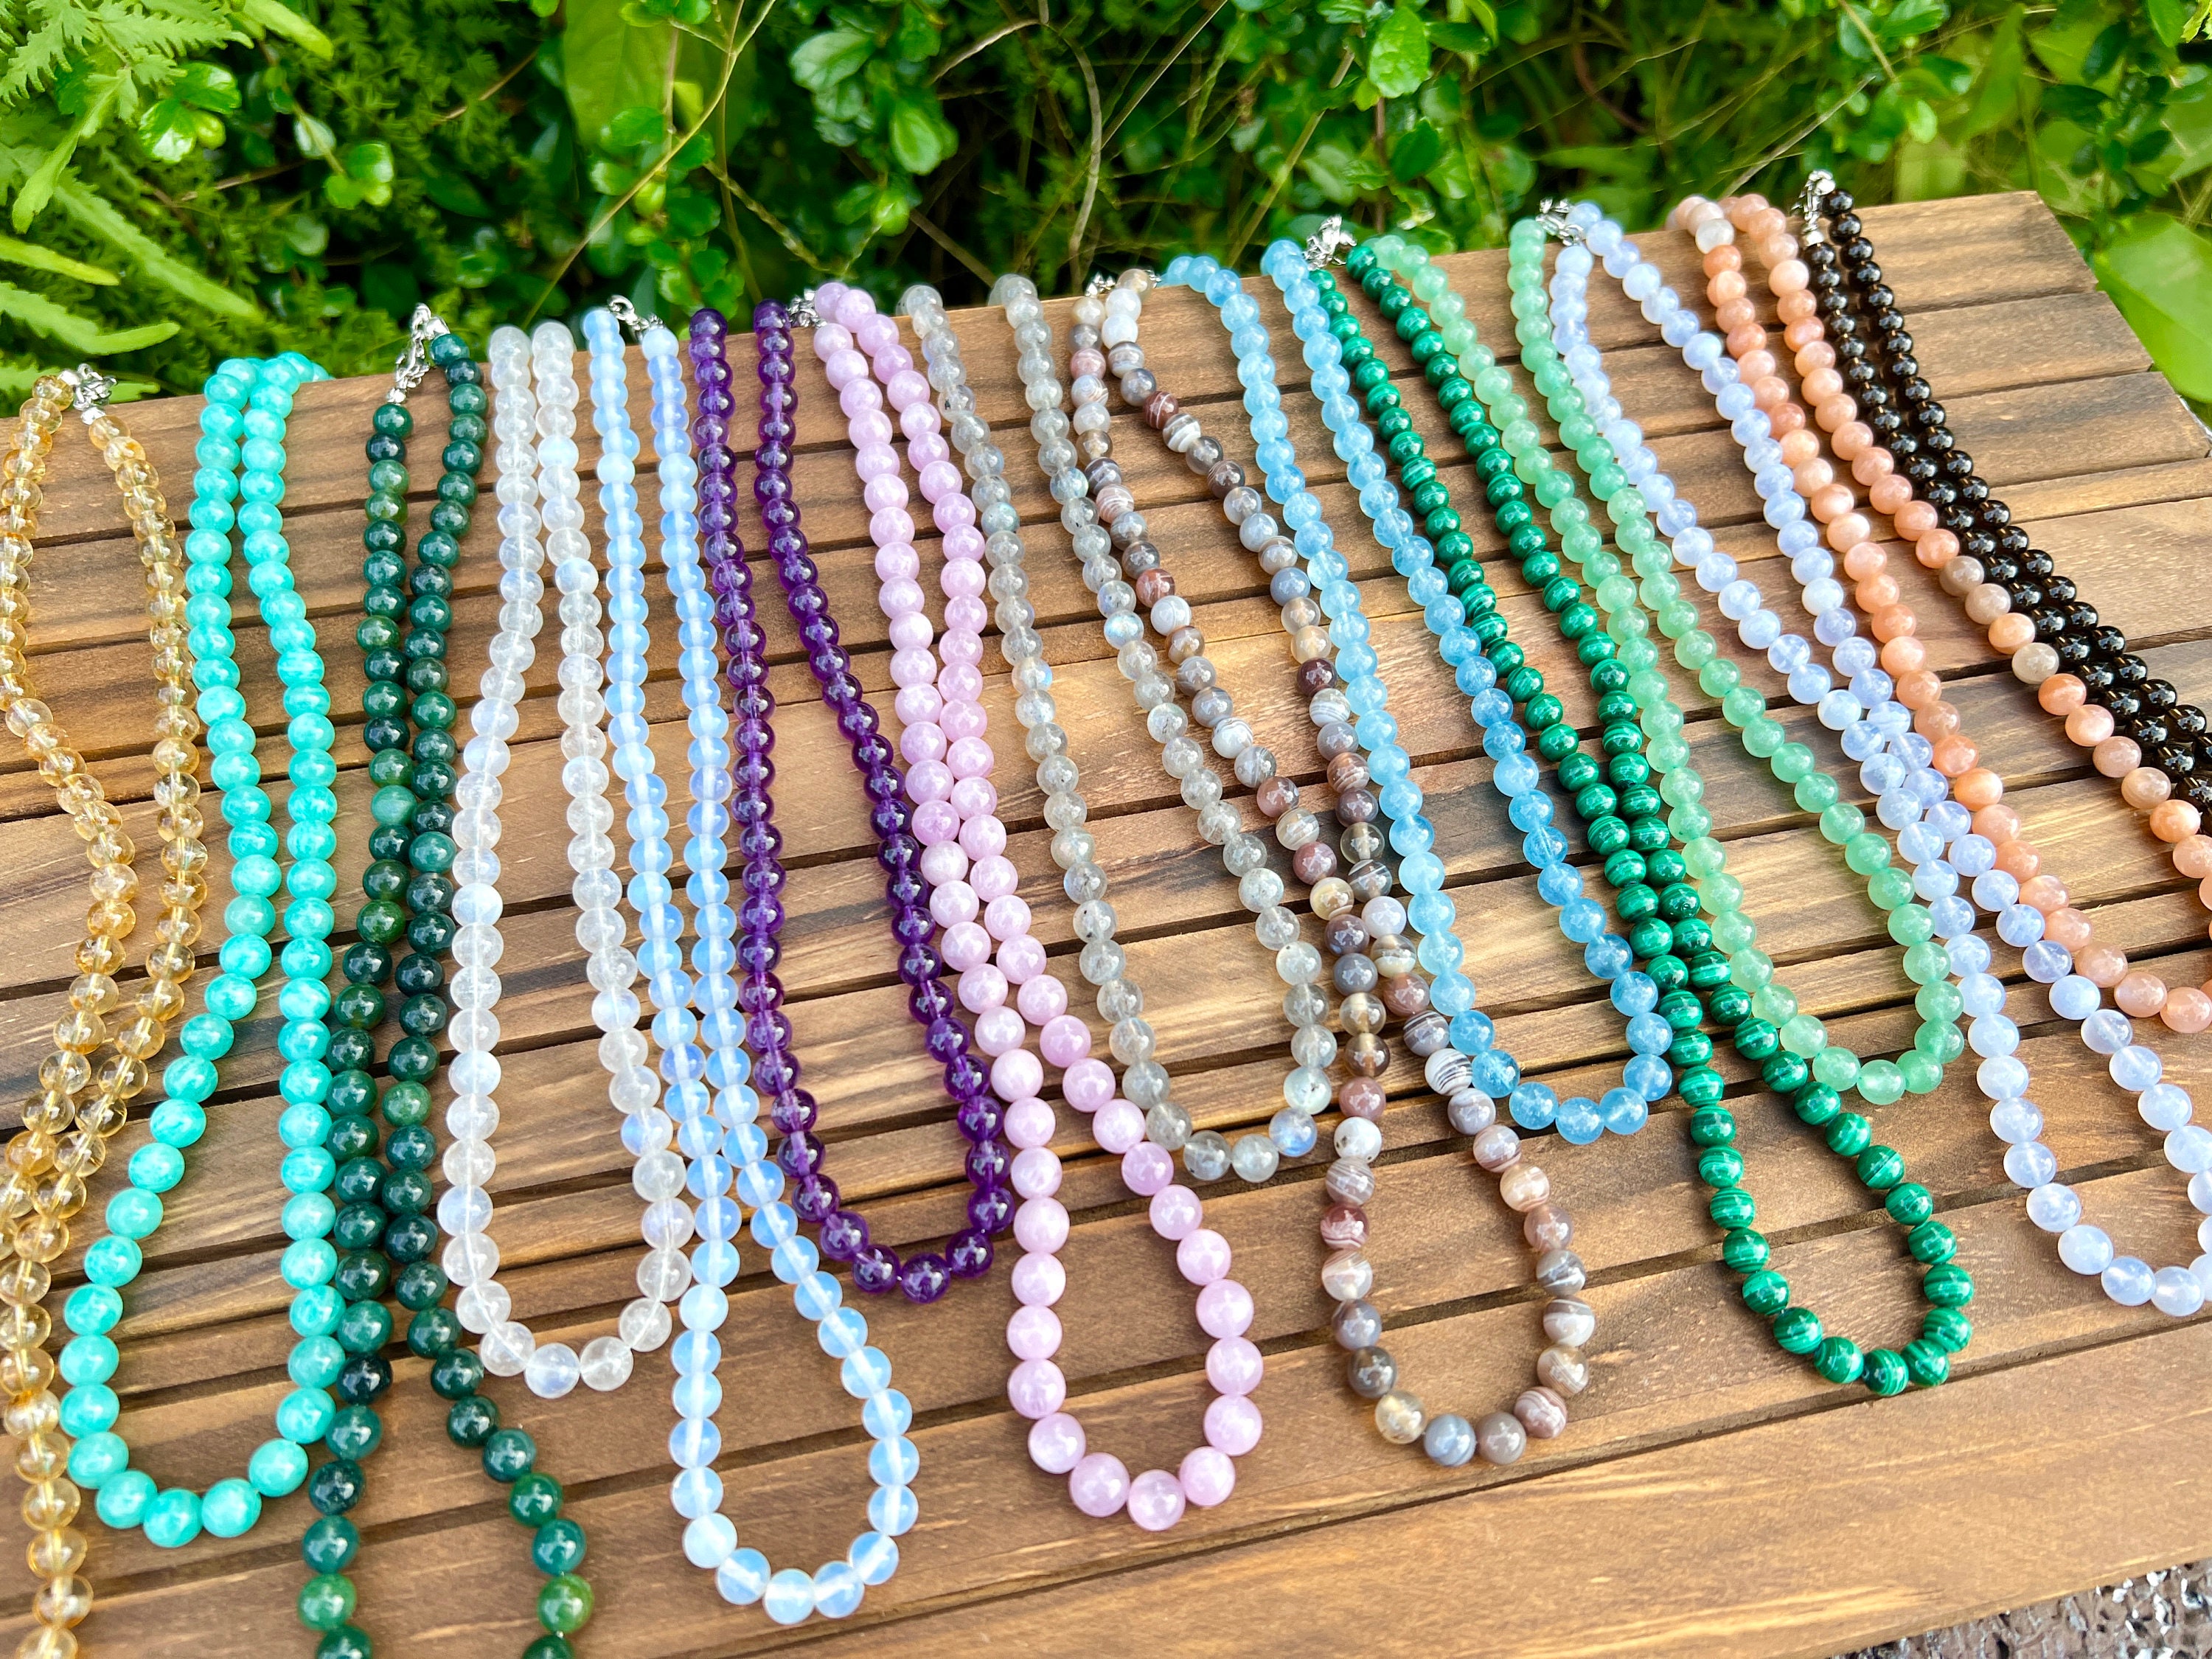 Wholesale Bulk Mardi Gras Bead Necklaces | DollarDays